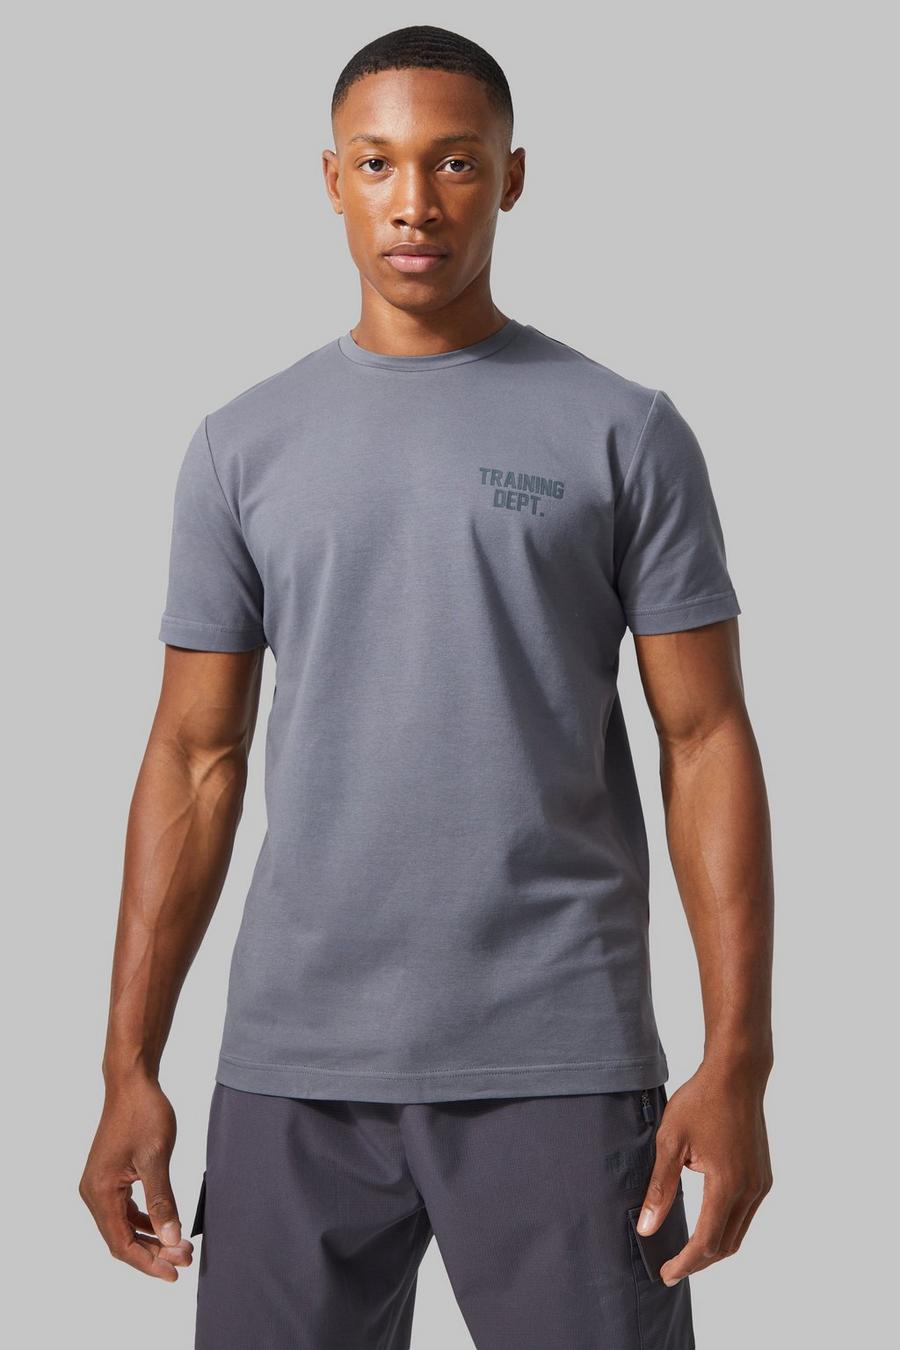 Charcoal Active Slim Fit Training Dept Performance T-Shirt image number 1